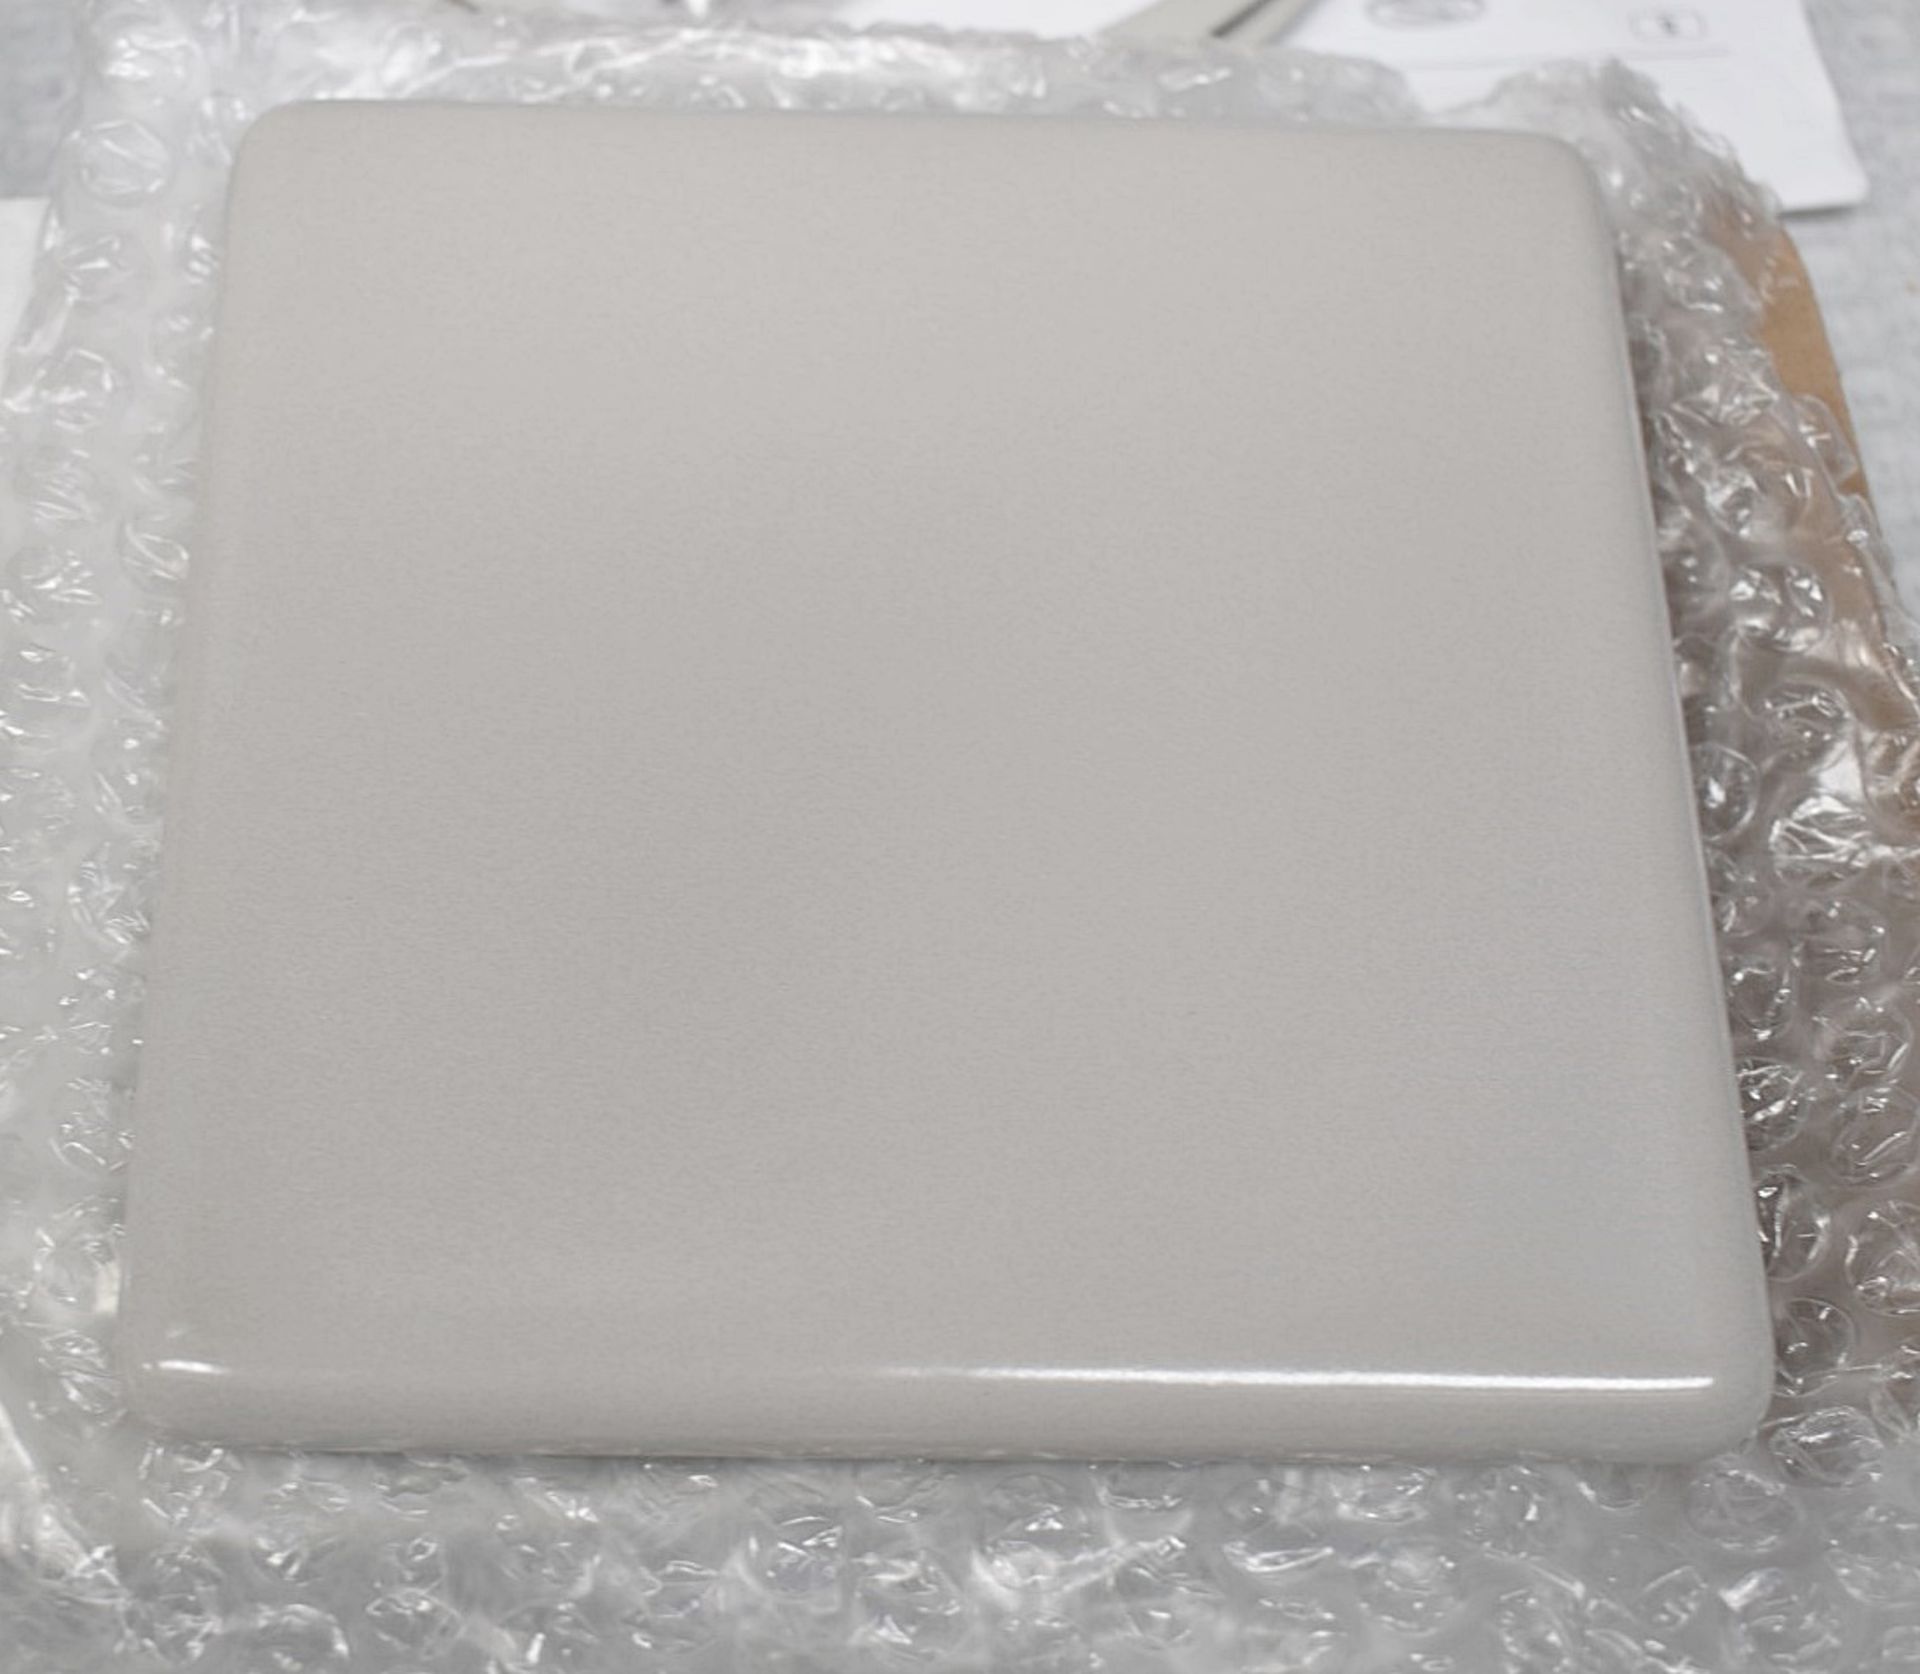 1 x KALDEWEI 'Conoflat' Enameled Horizontal Shower Waste Fitting, In Anthracite Matt Grey - RRP £216 - Image 3 of 6